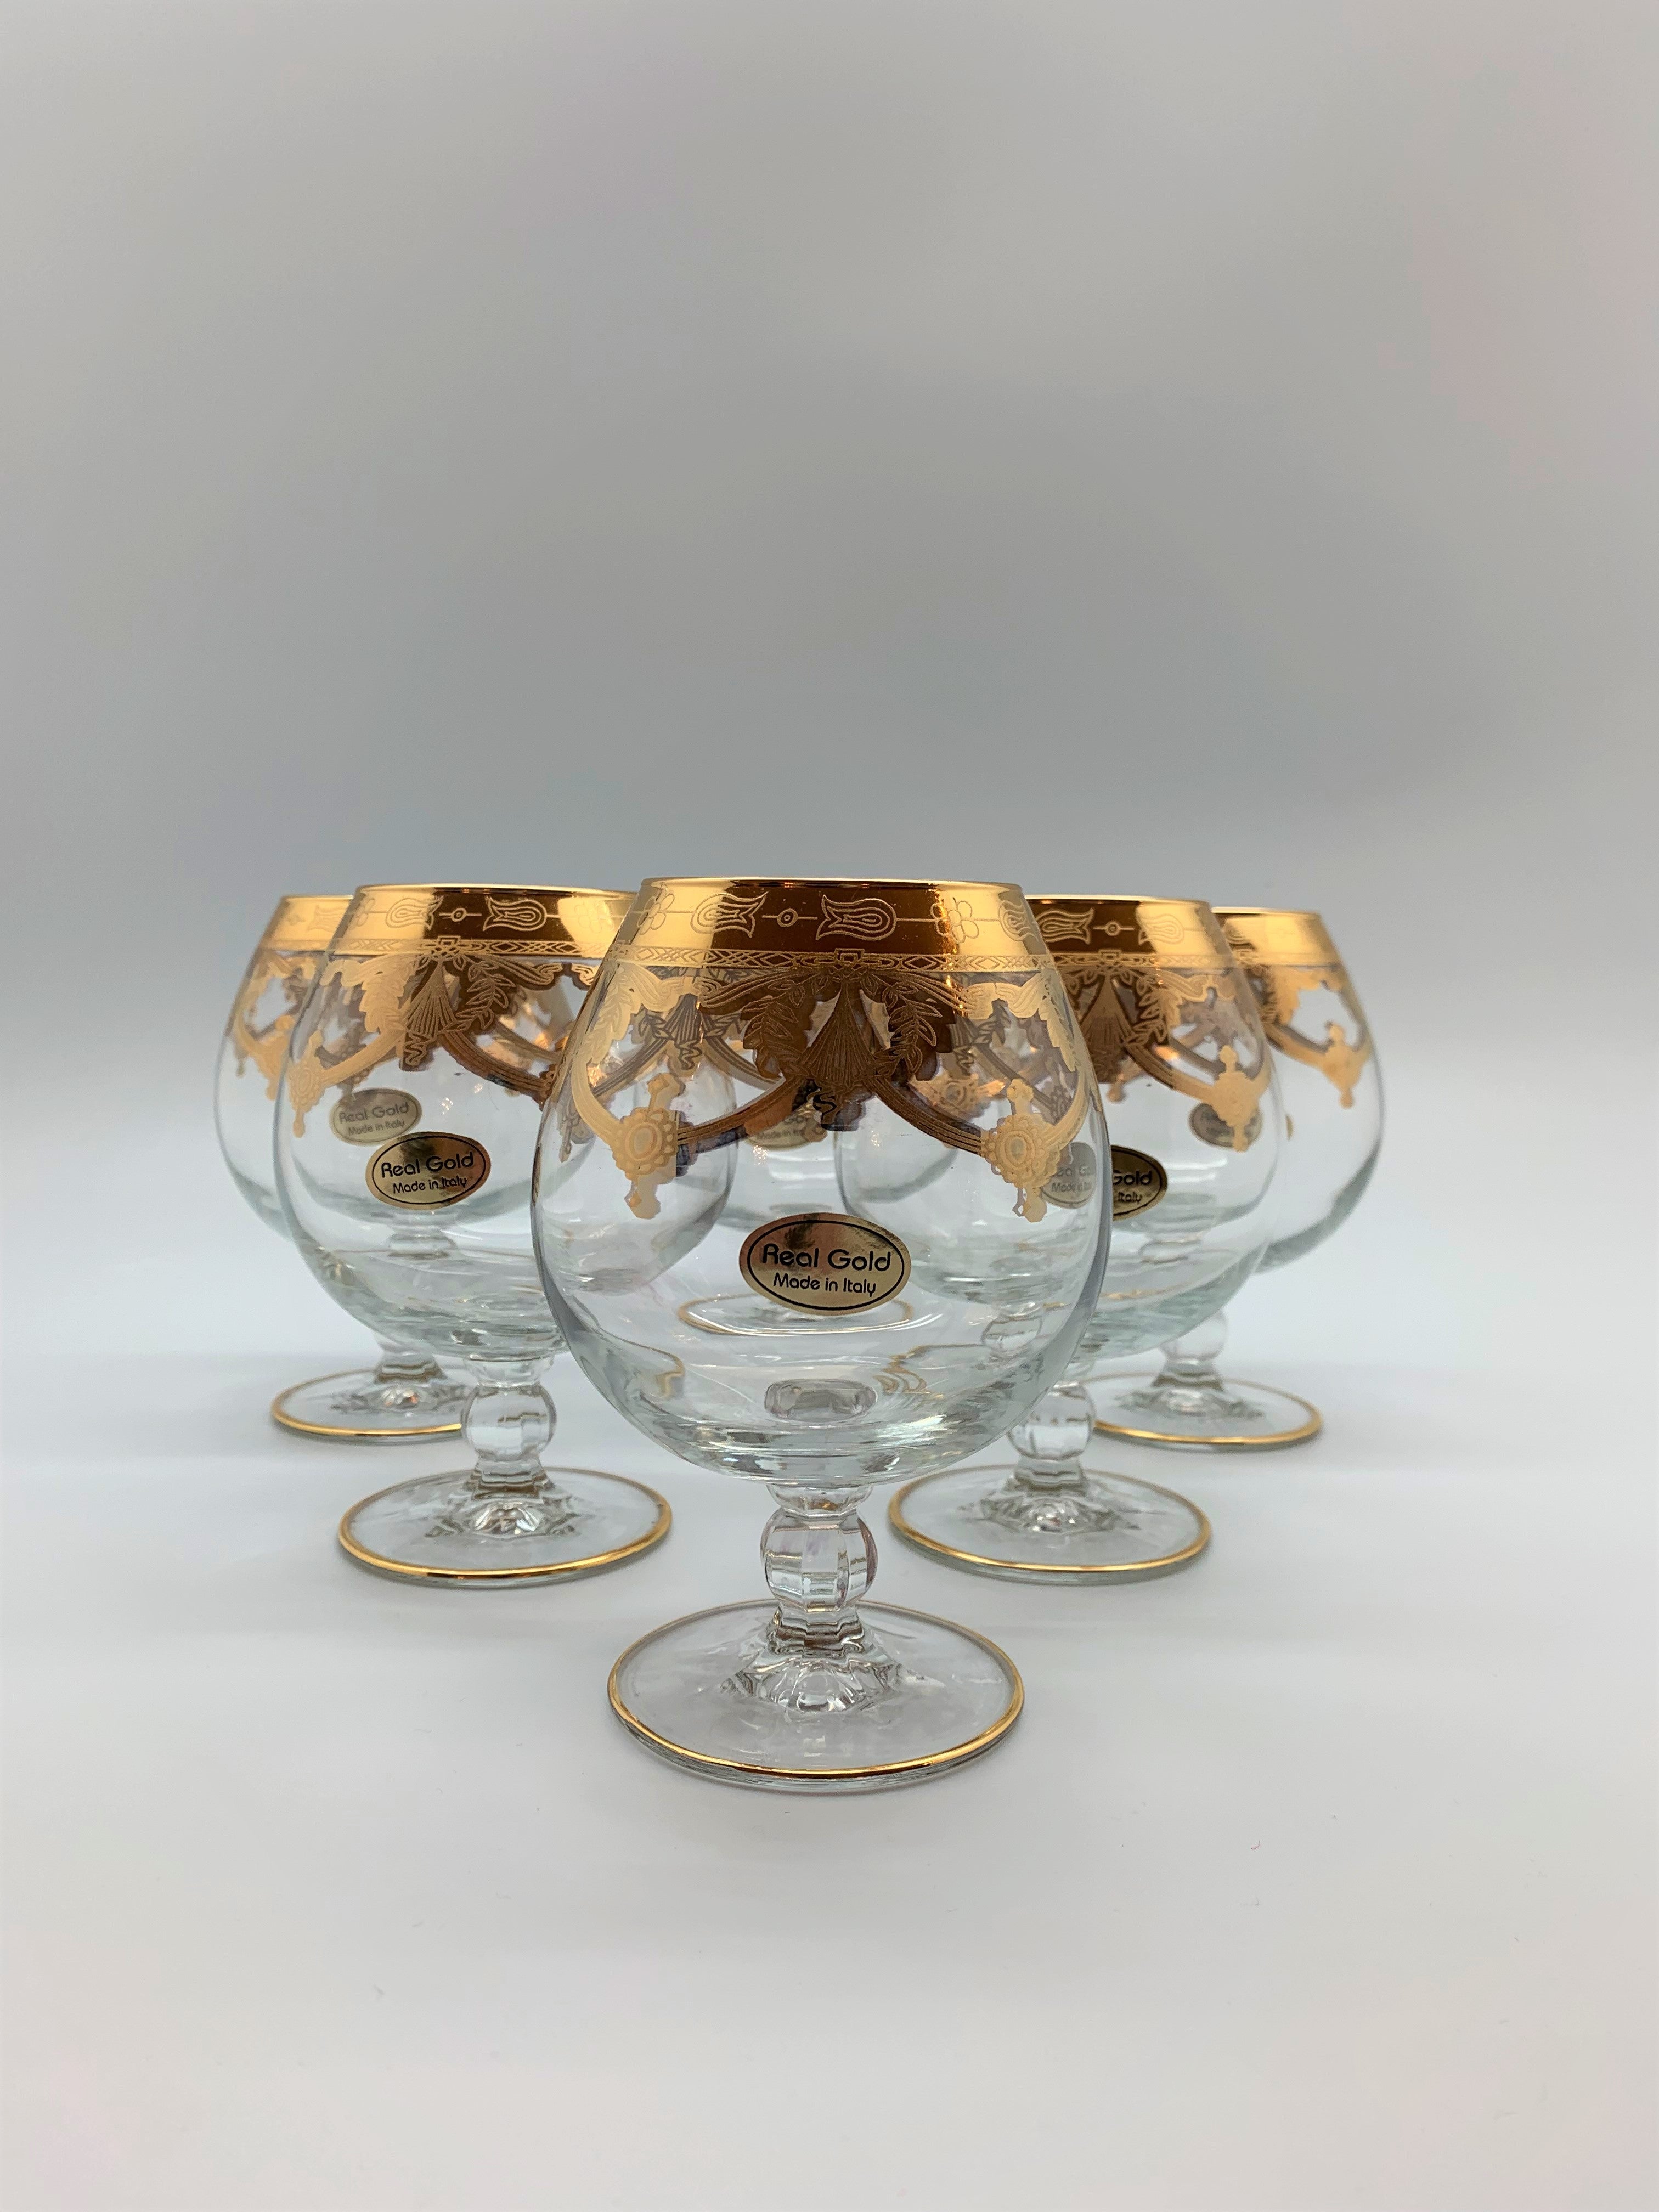 Murano Cognac Glasses Floral de luxe